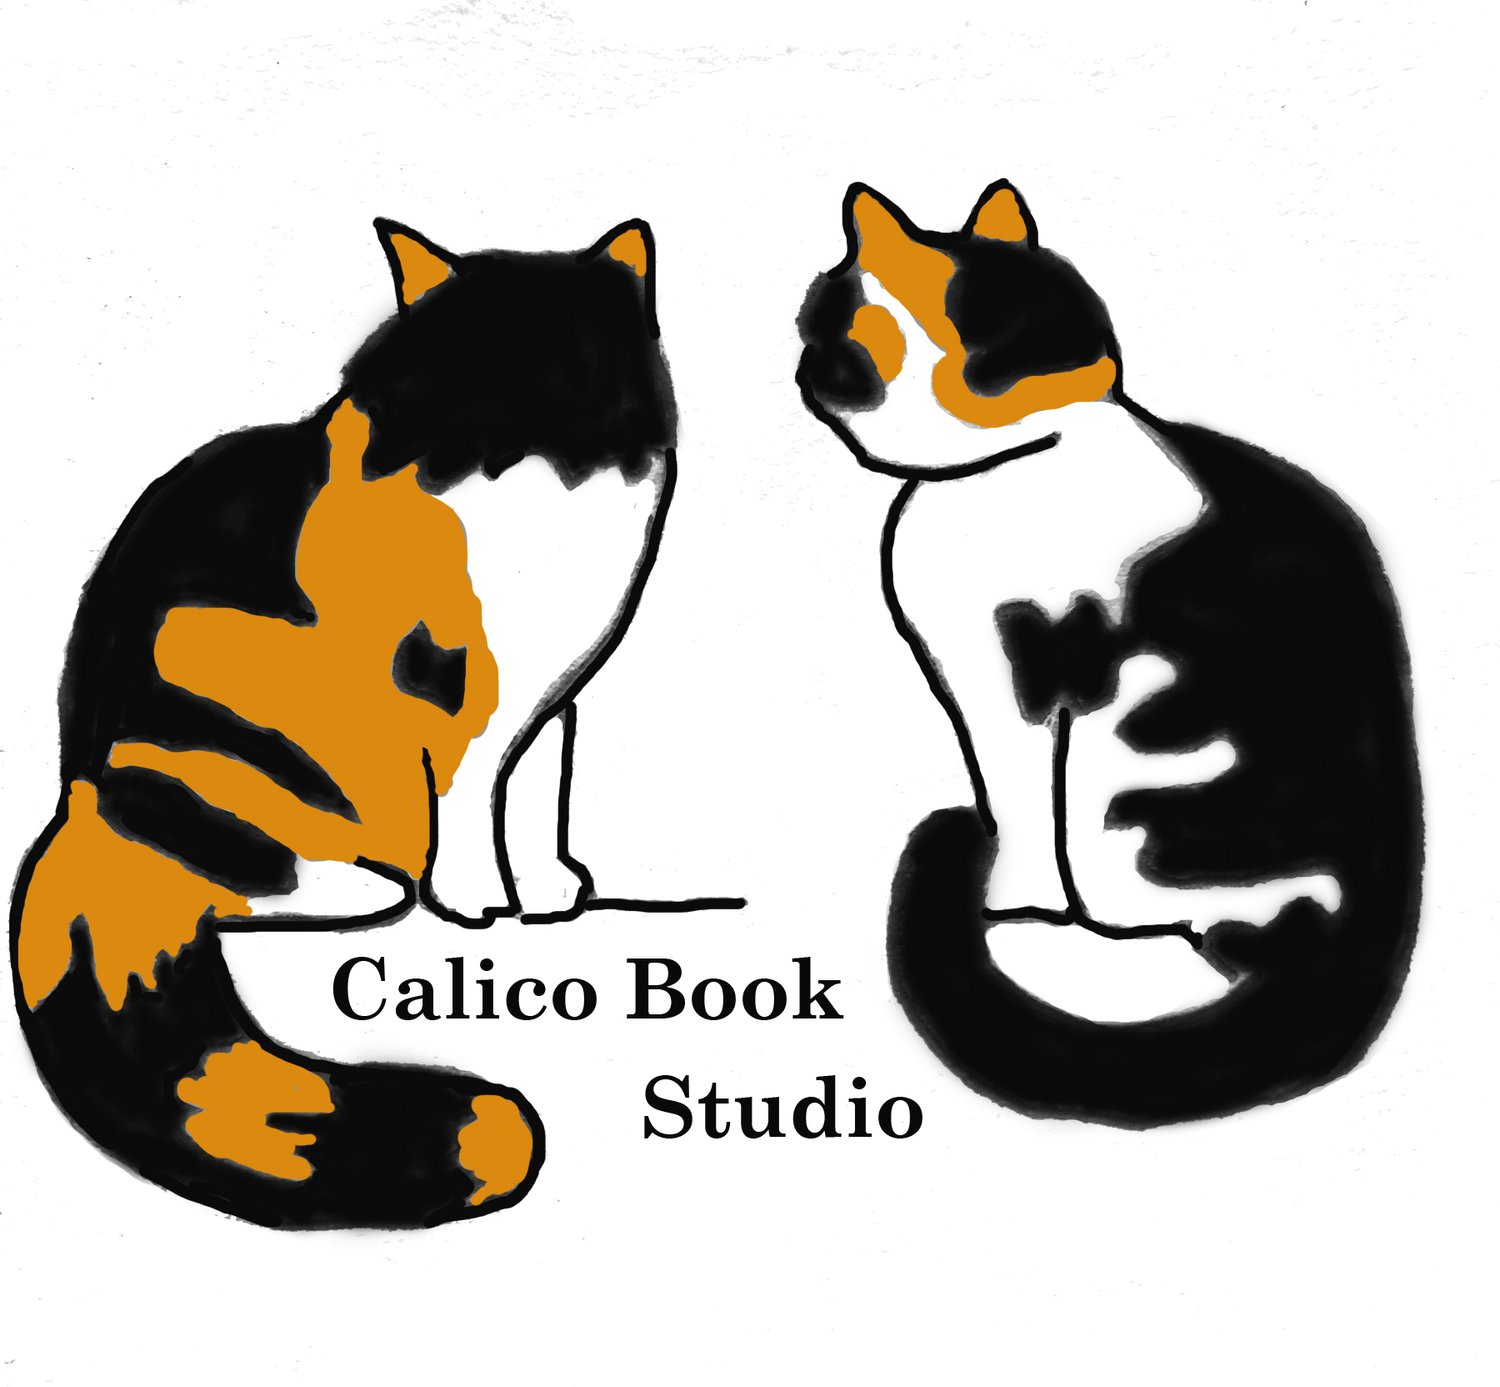 Calico Book Studio